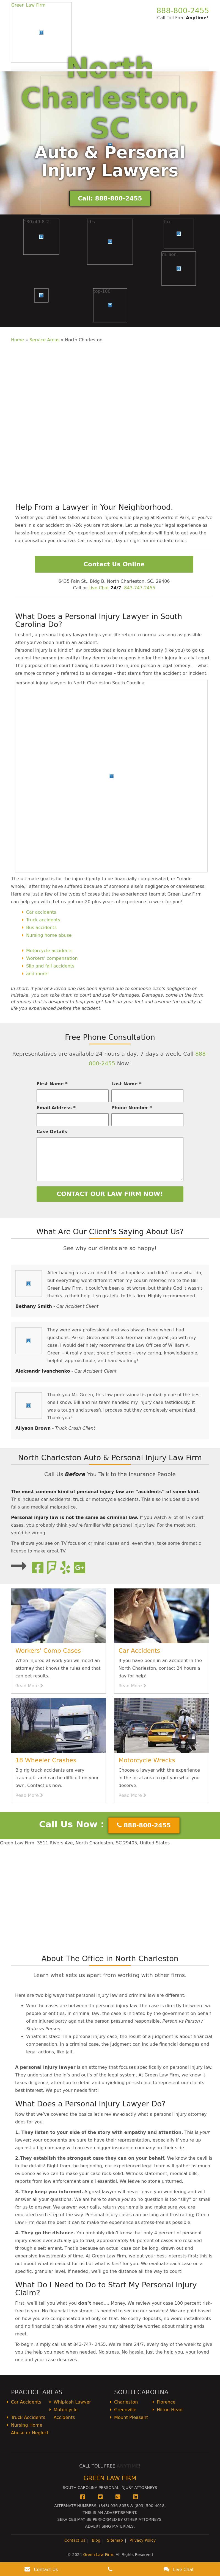 Green Law Firm - North Charleston SC Lawyers